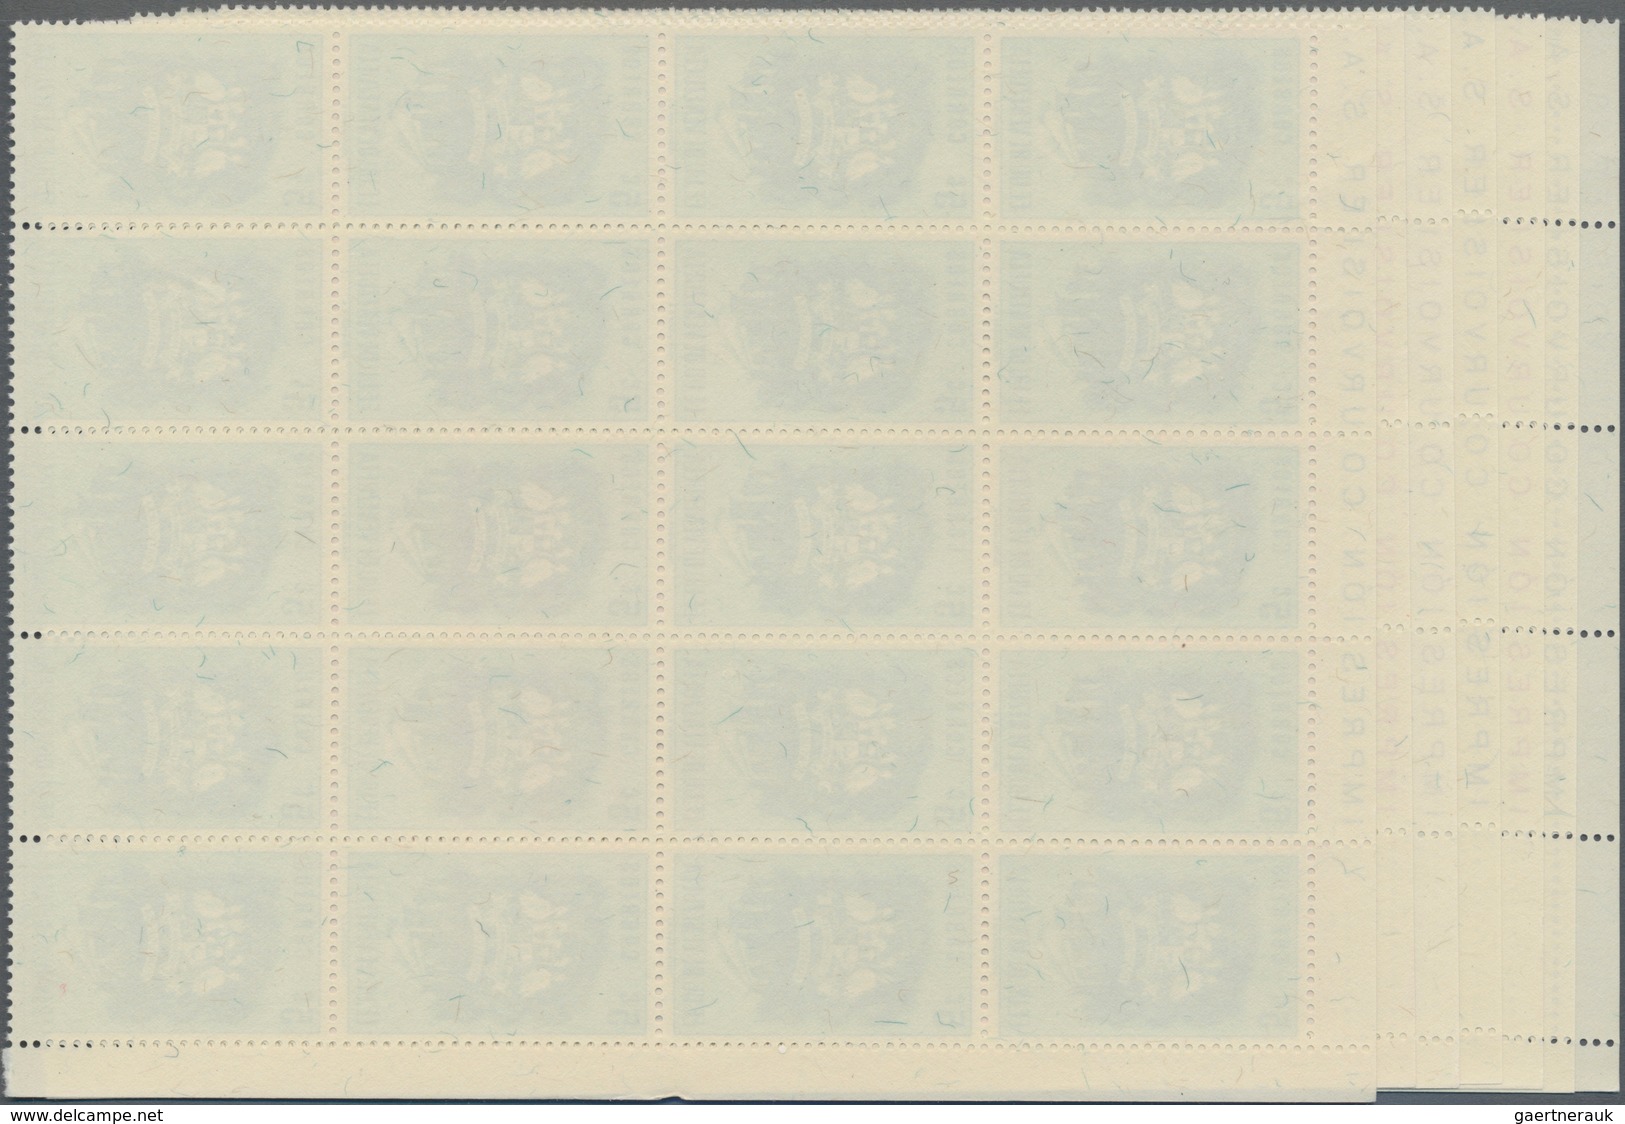 Venezuela: 1953, Coat Of Arms 'PORTUGUESA' Normal Stamps Complete Set Of Seven In Blocks Of 20 From - Venezuela